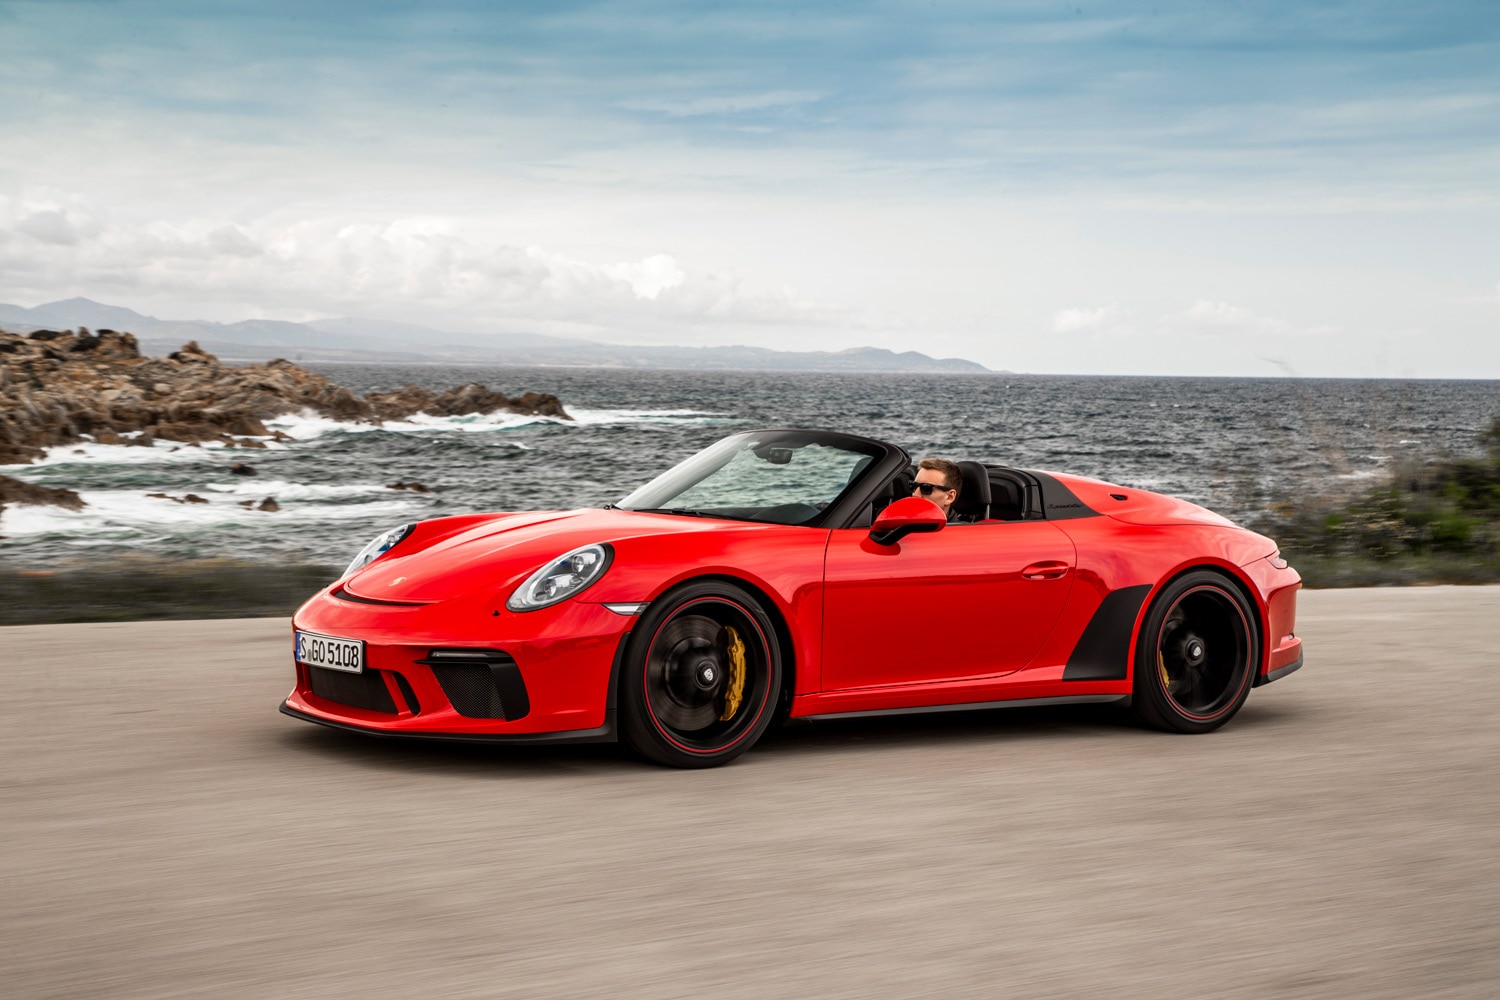 2019 Porsche 911 Speedster in red driving by the ocean